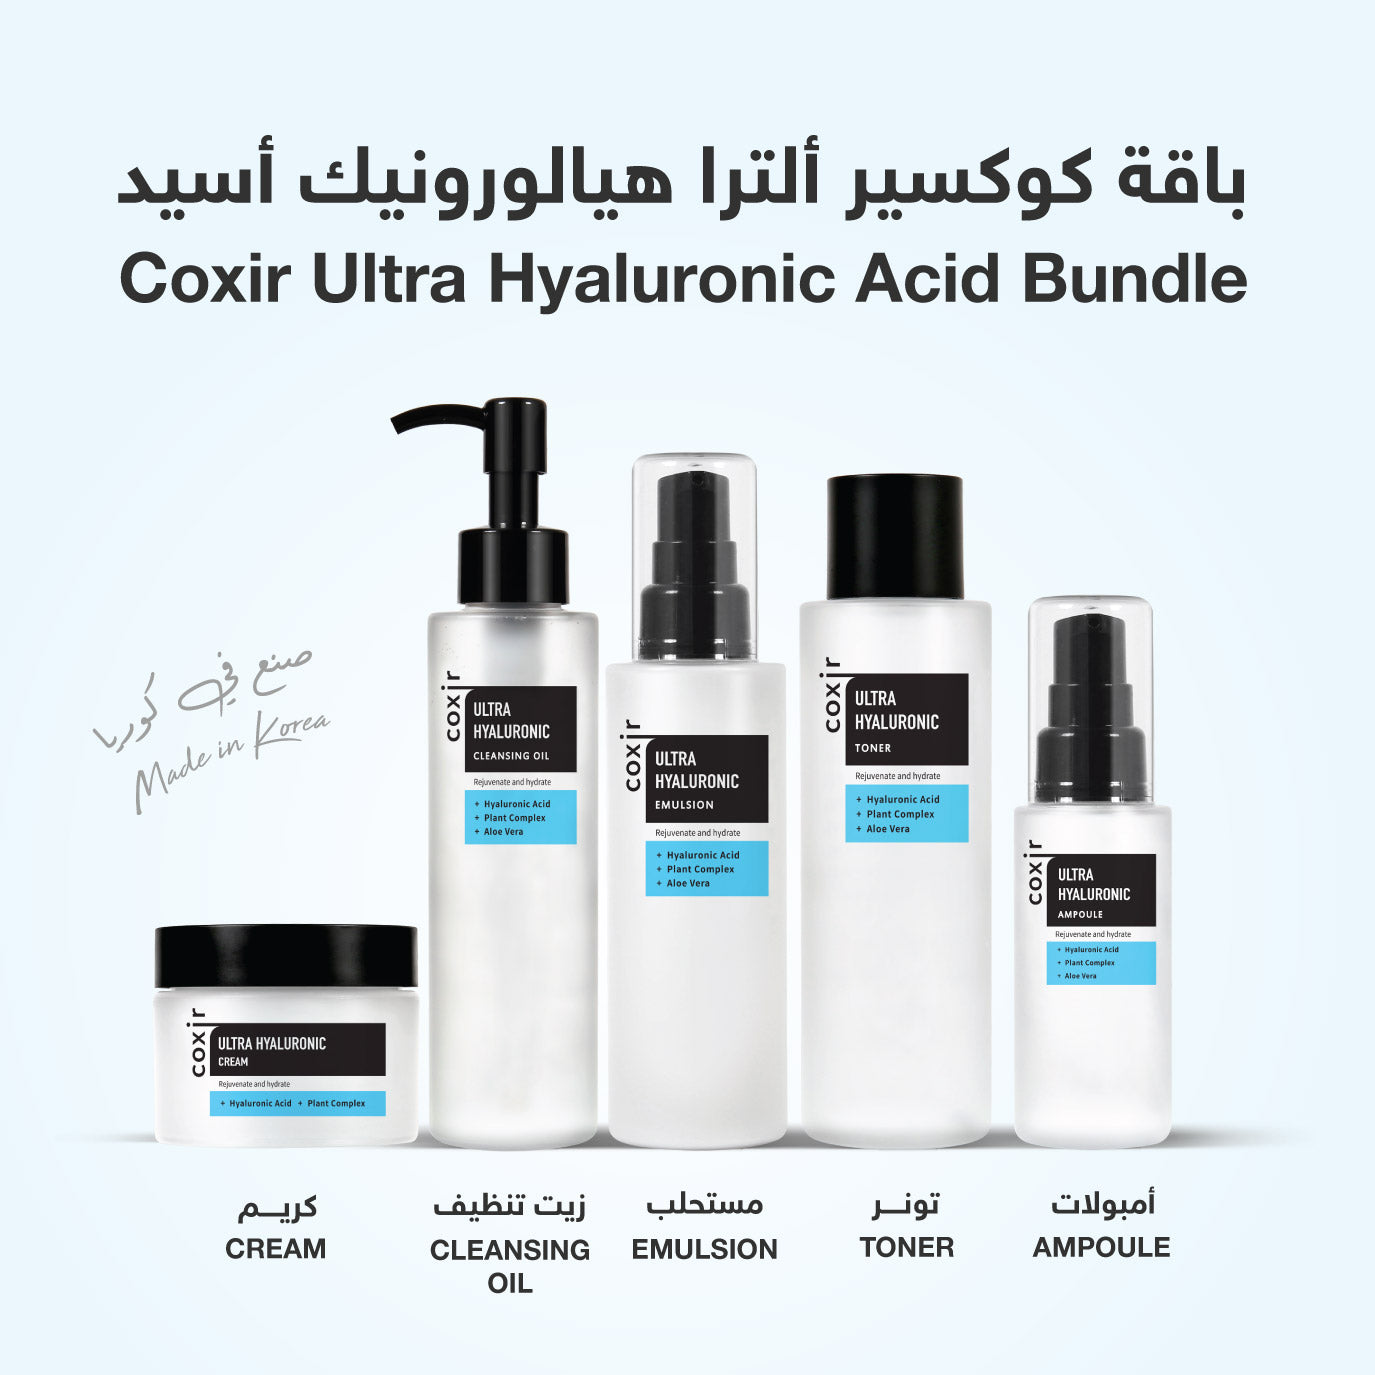 Coxir's Ultra Hyaluronic Acid Bundle